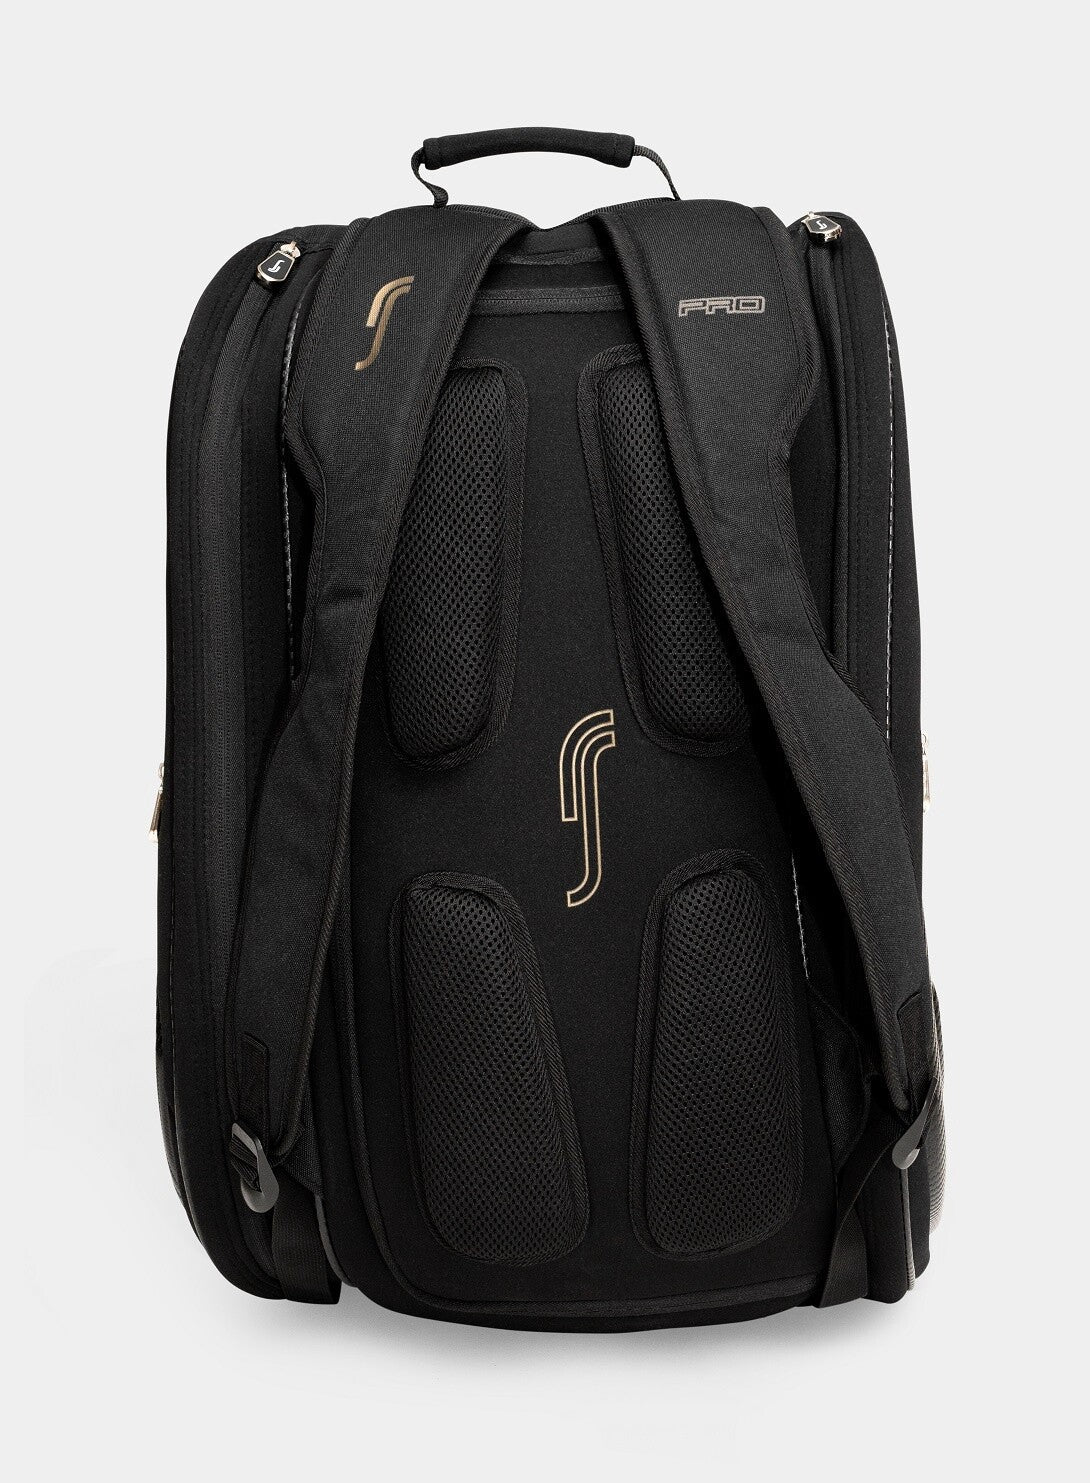 RS Pro Padel Bag Black & Gold